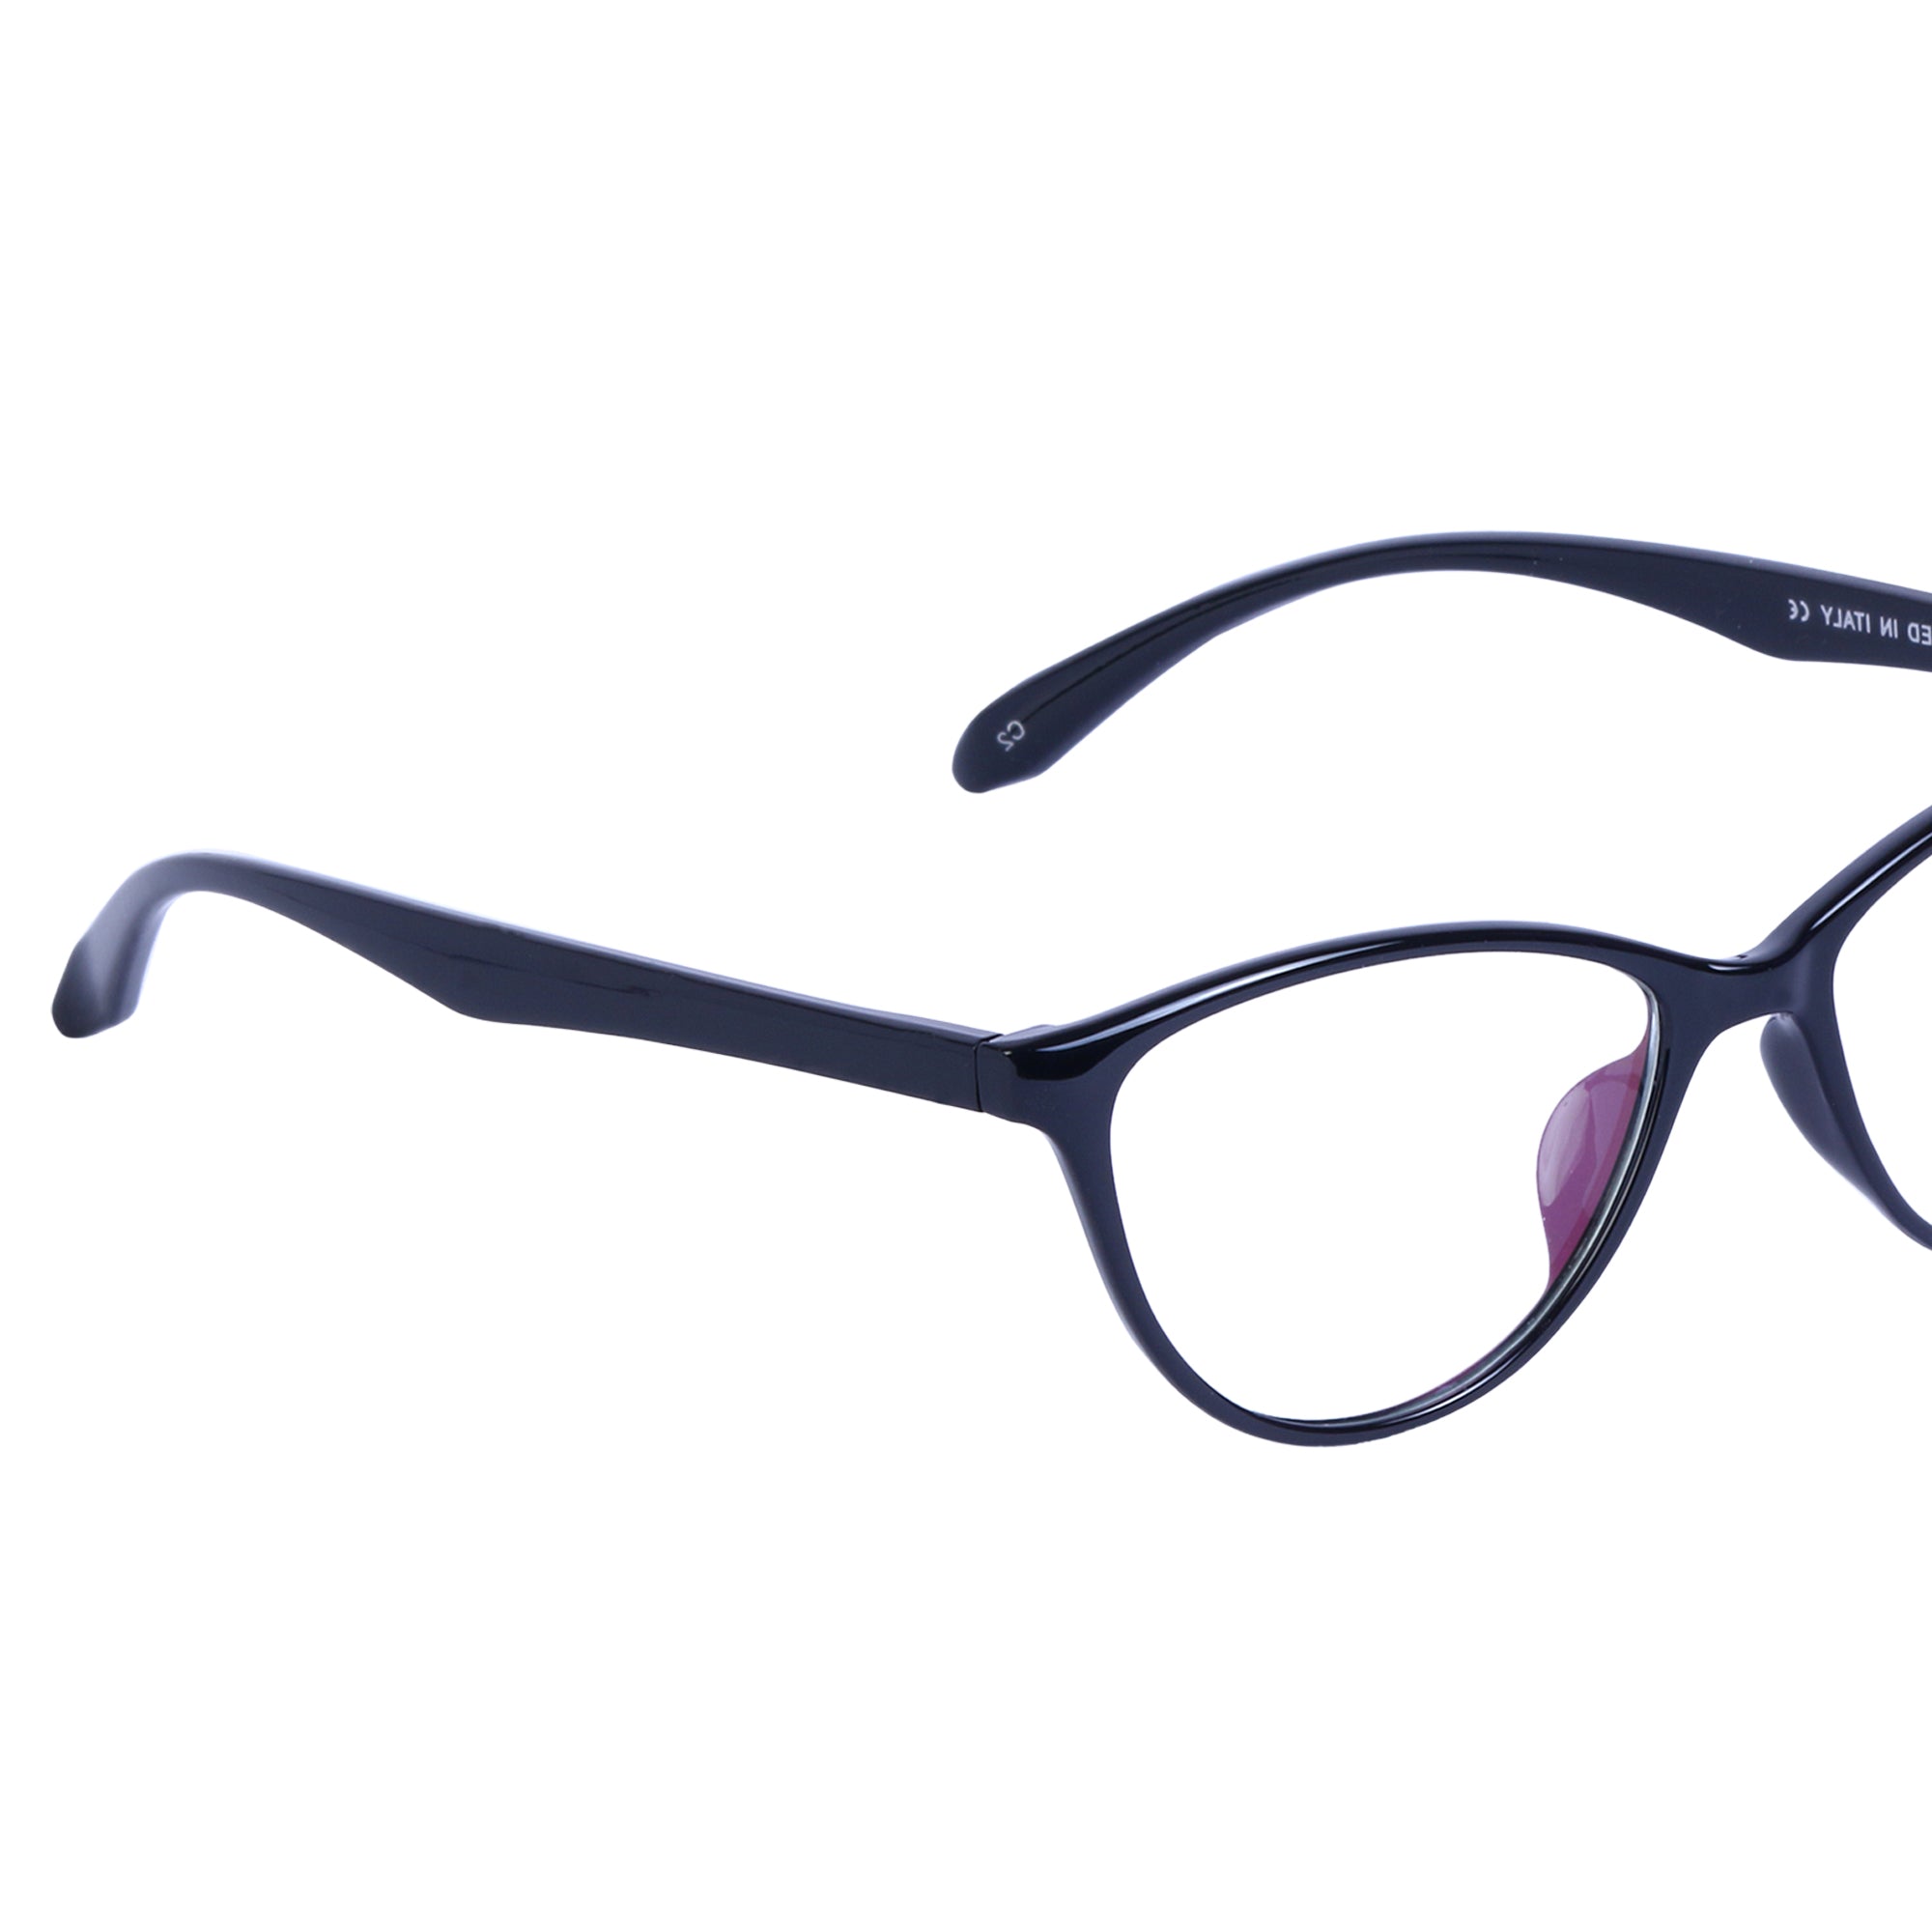 Black Cateye Rimmed Eyeglasses - L1858 Black